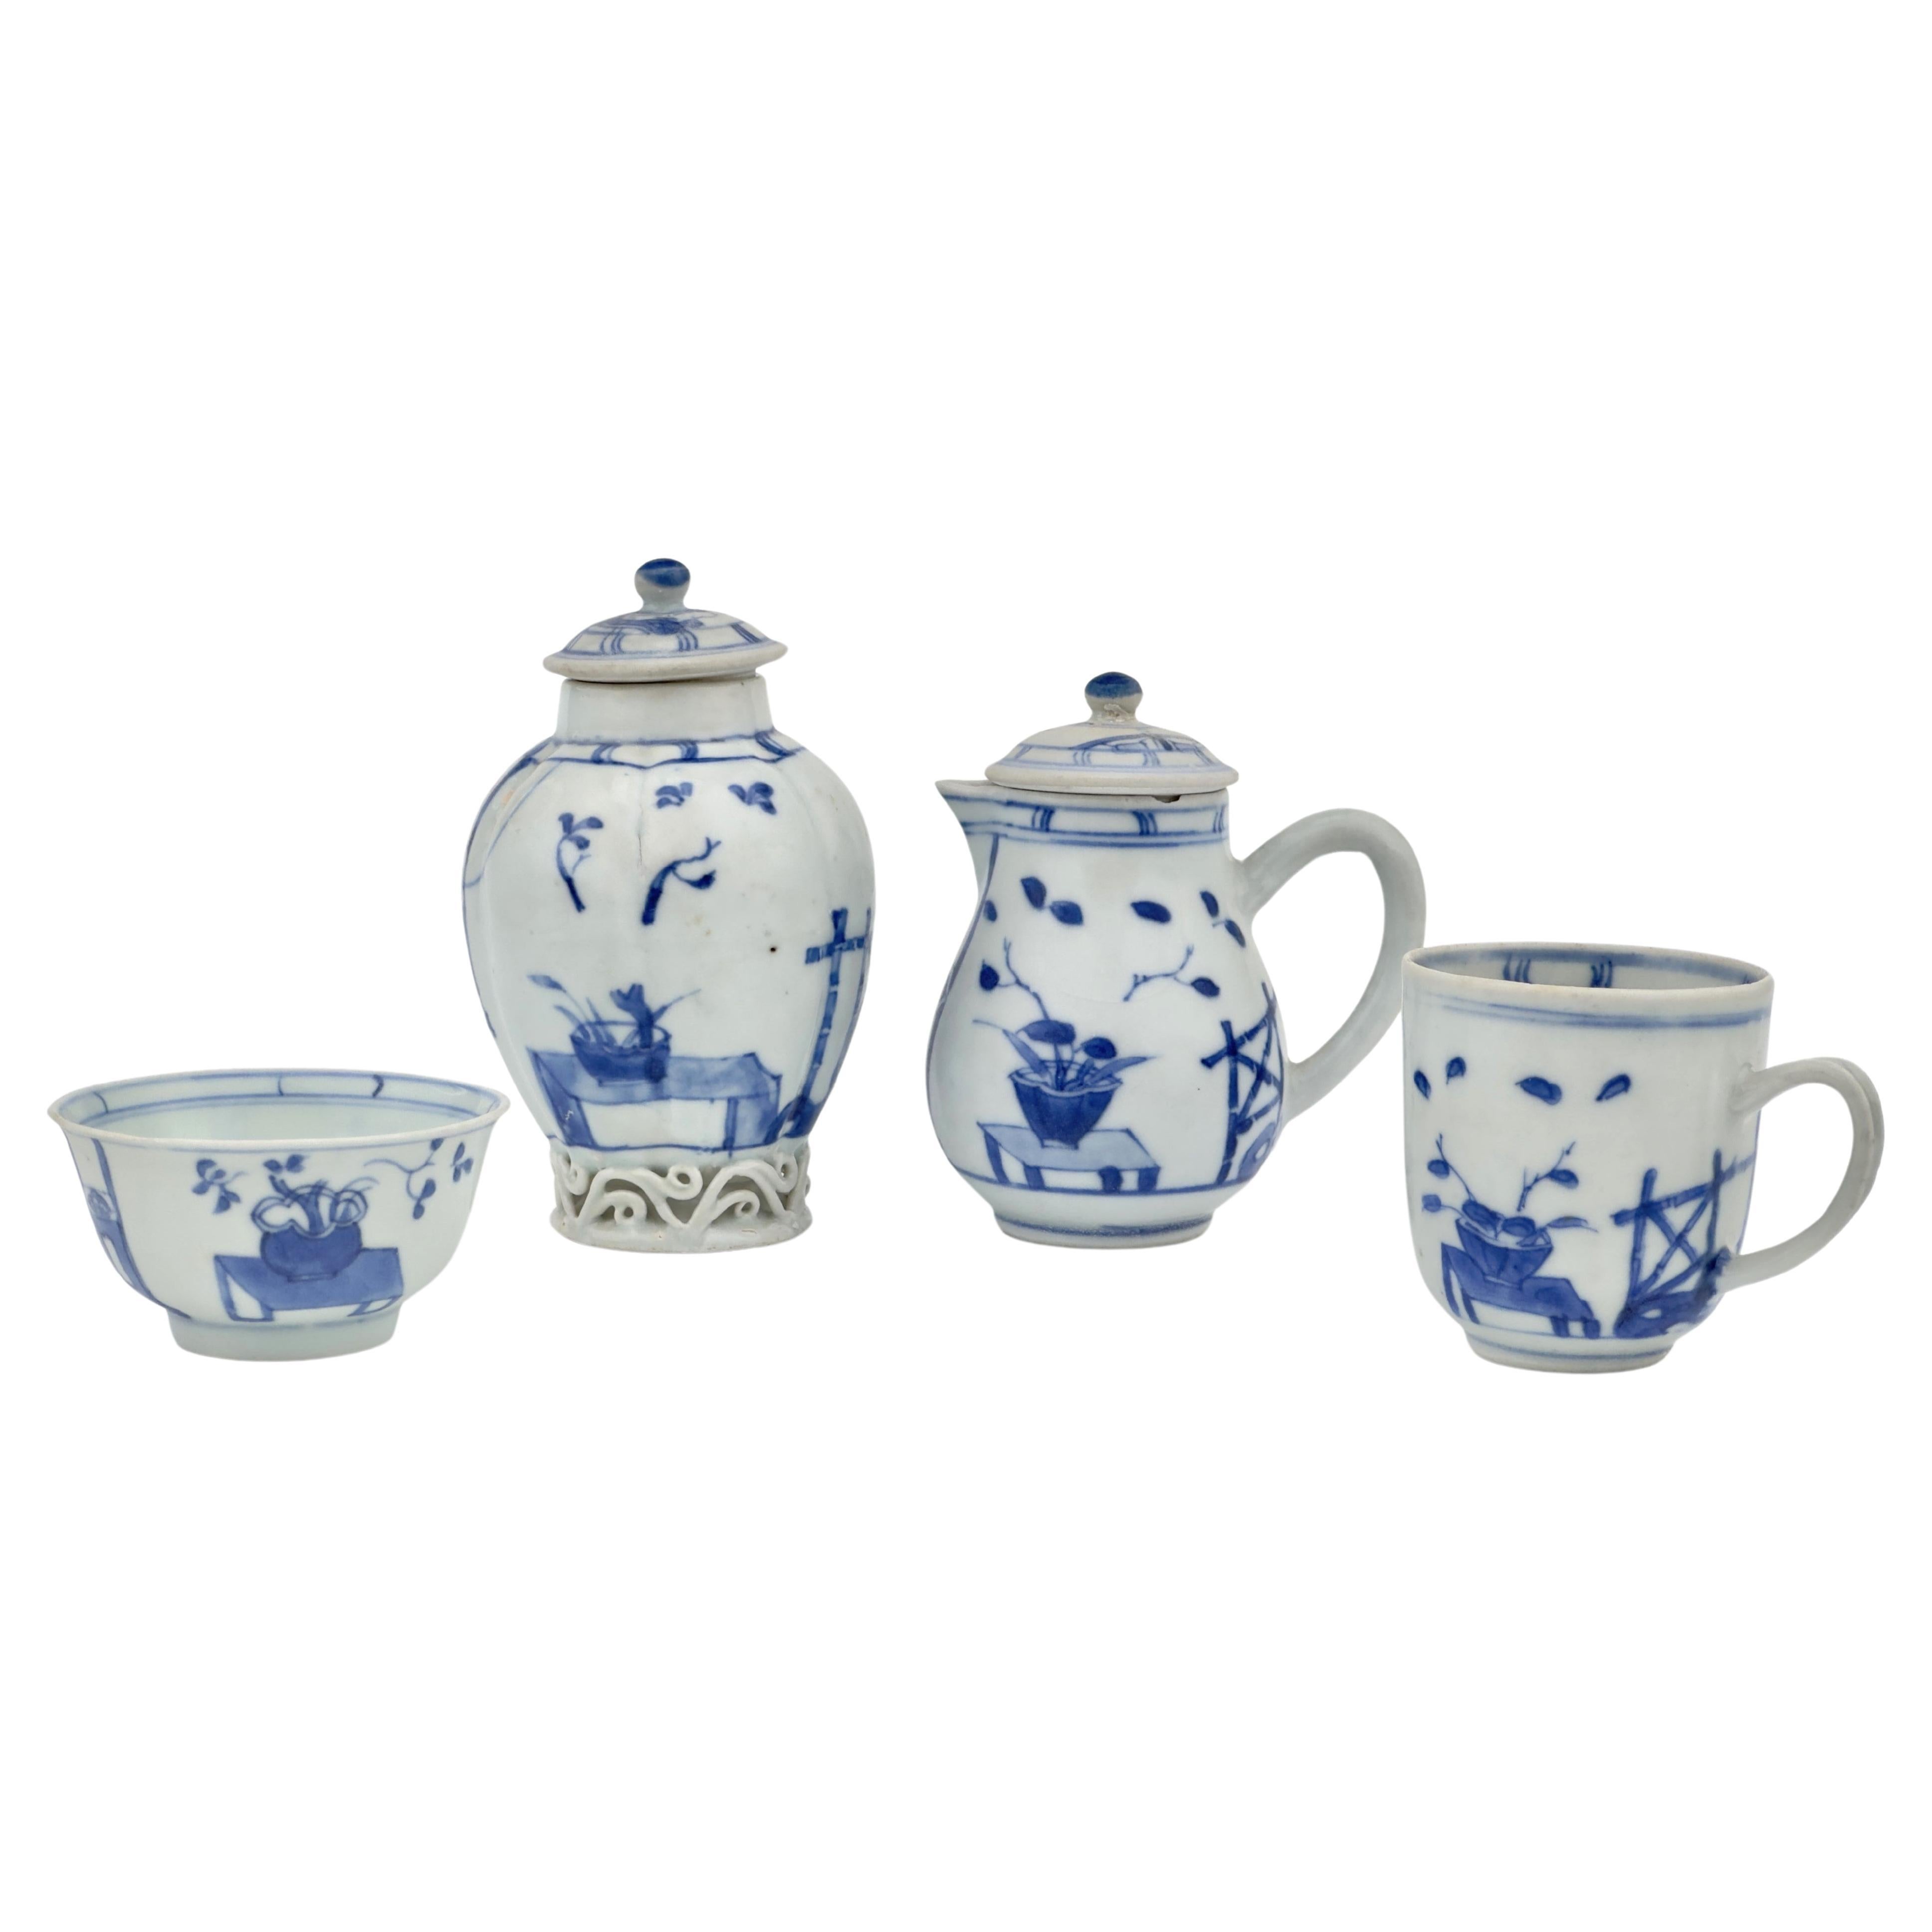 Blaues und weißes Teeservice mit Imari-Pavillon-Muster, ca. 1725, Qing Dynasty, Yongzheng Re